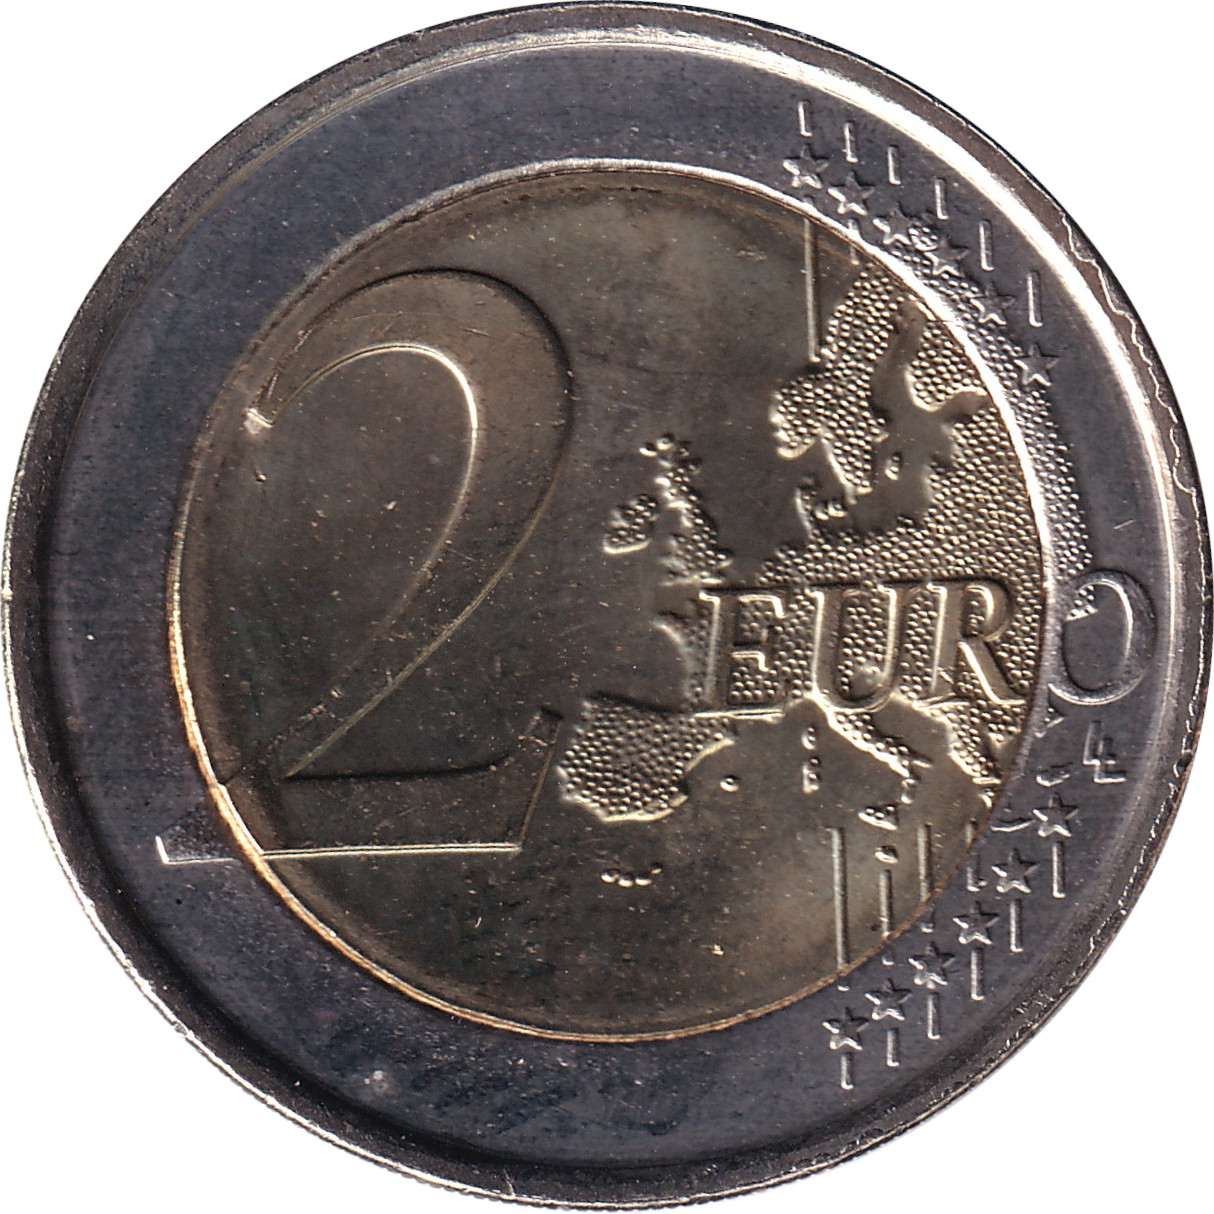 2 euro - Mise en circulation de l'Euro - Belgique